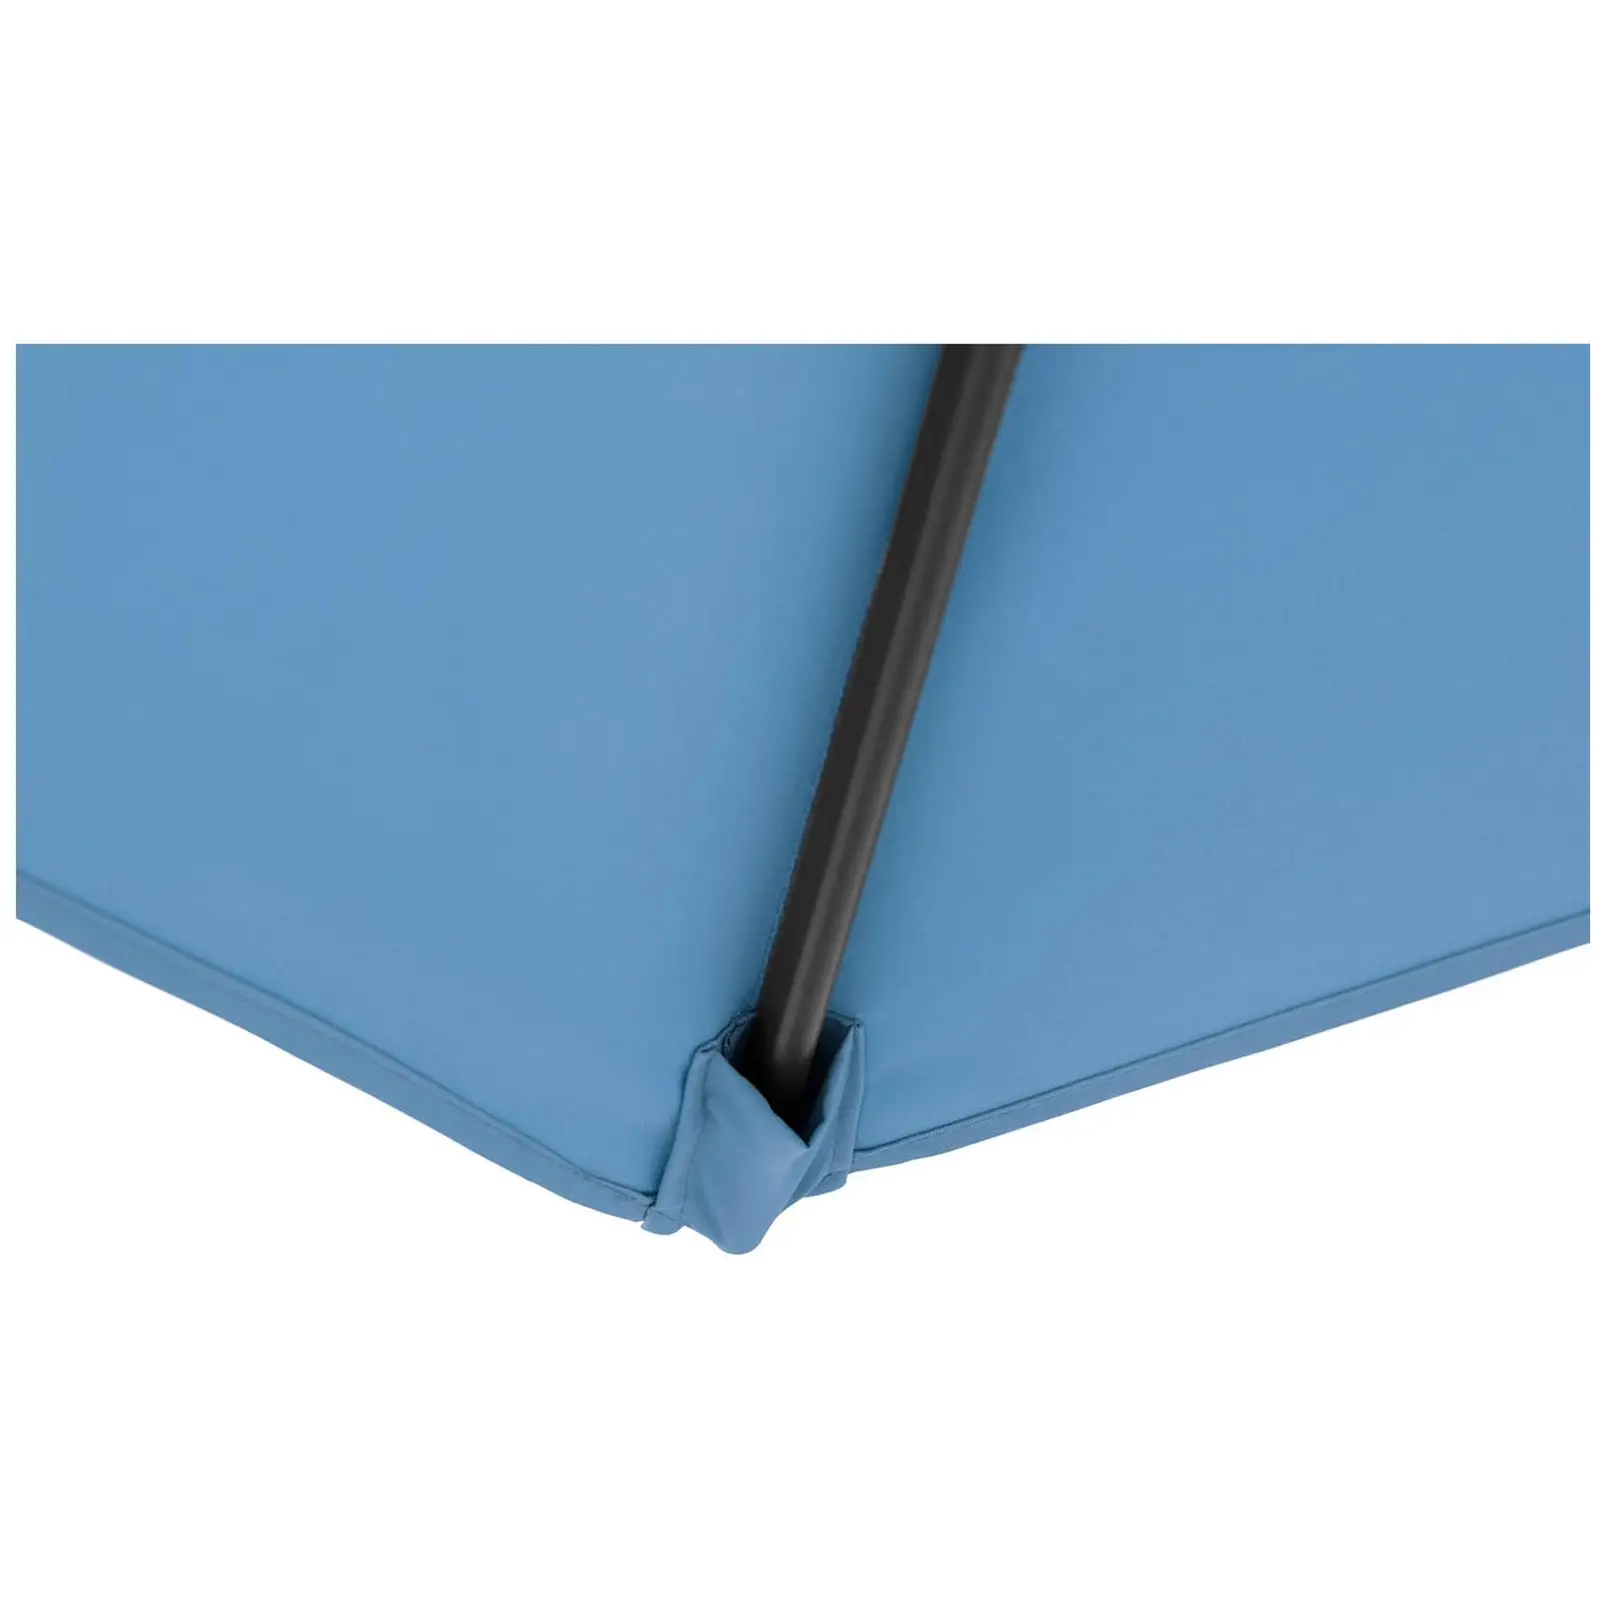 Hanging Parasol - blue - square - 250 x 250 cm - rotatable